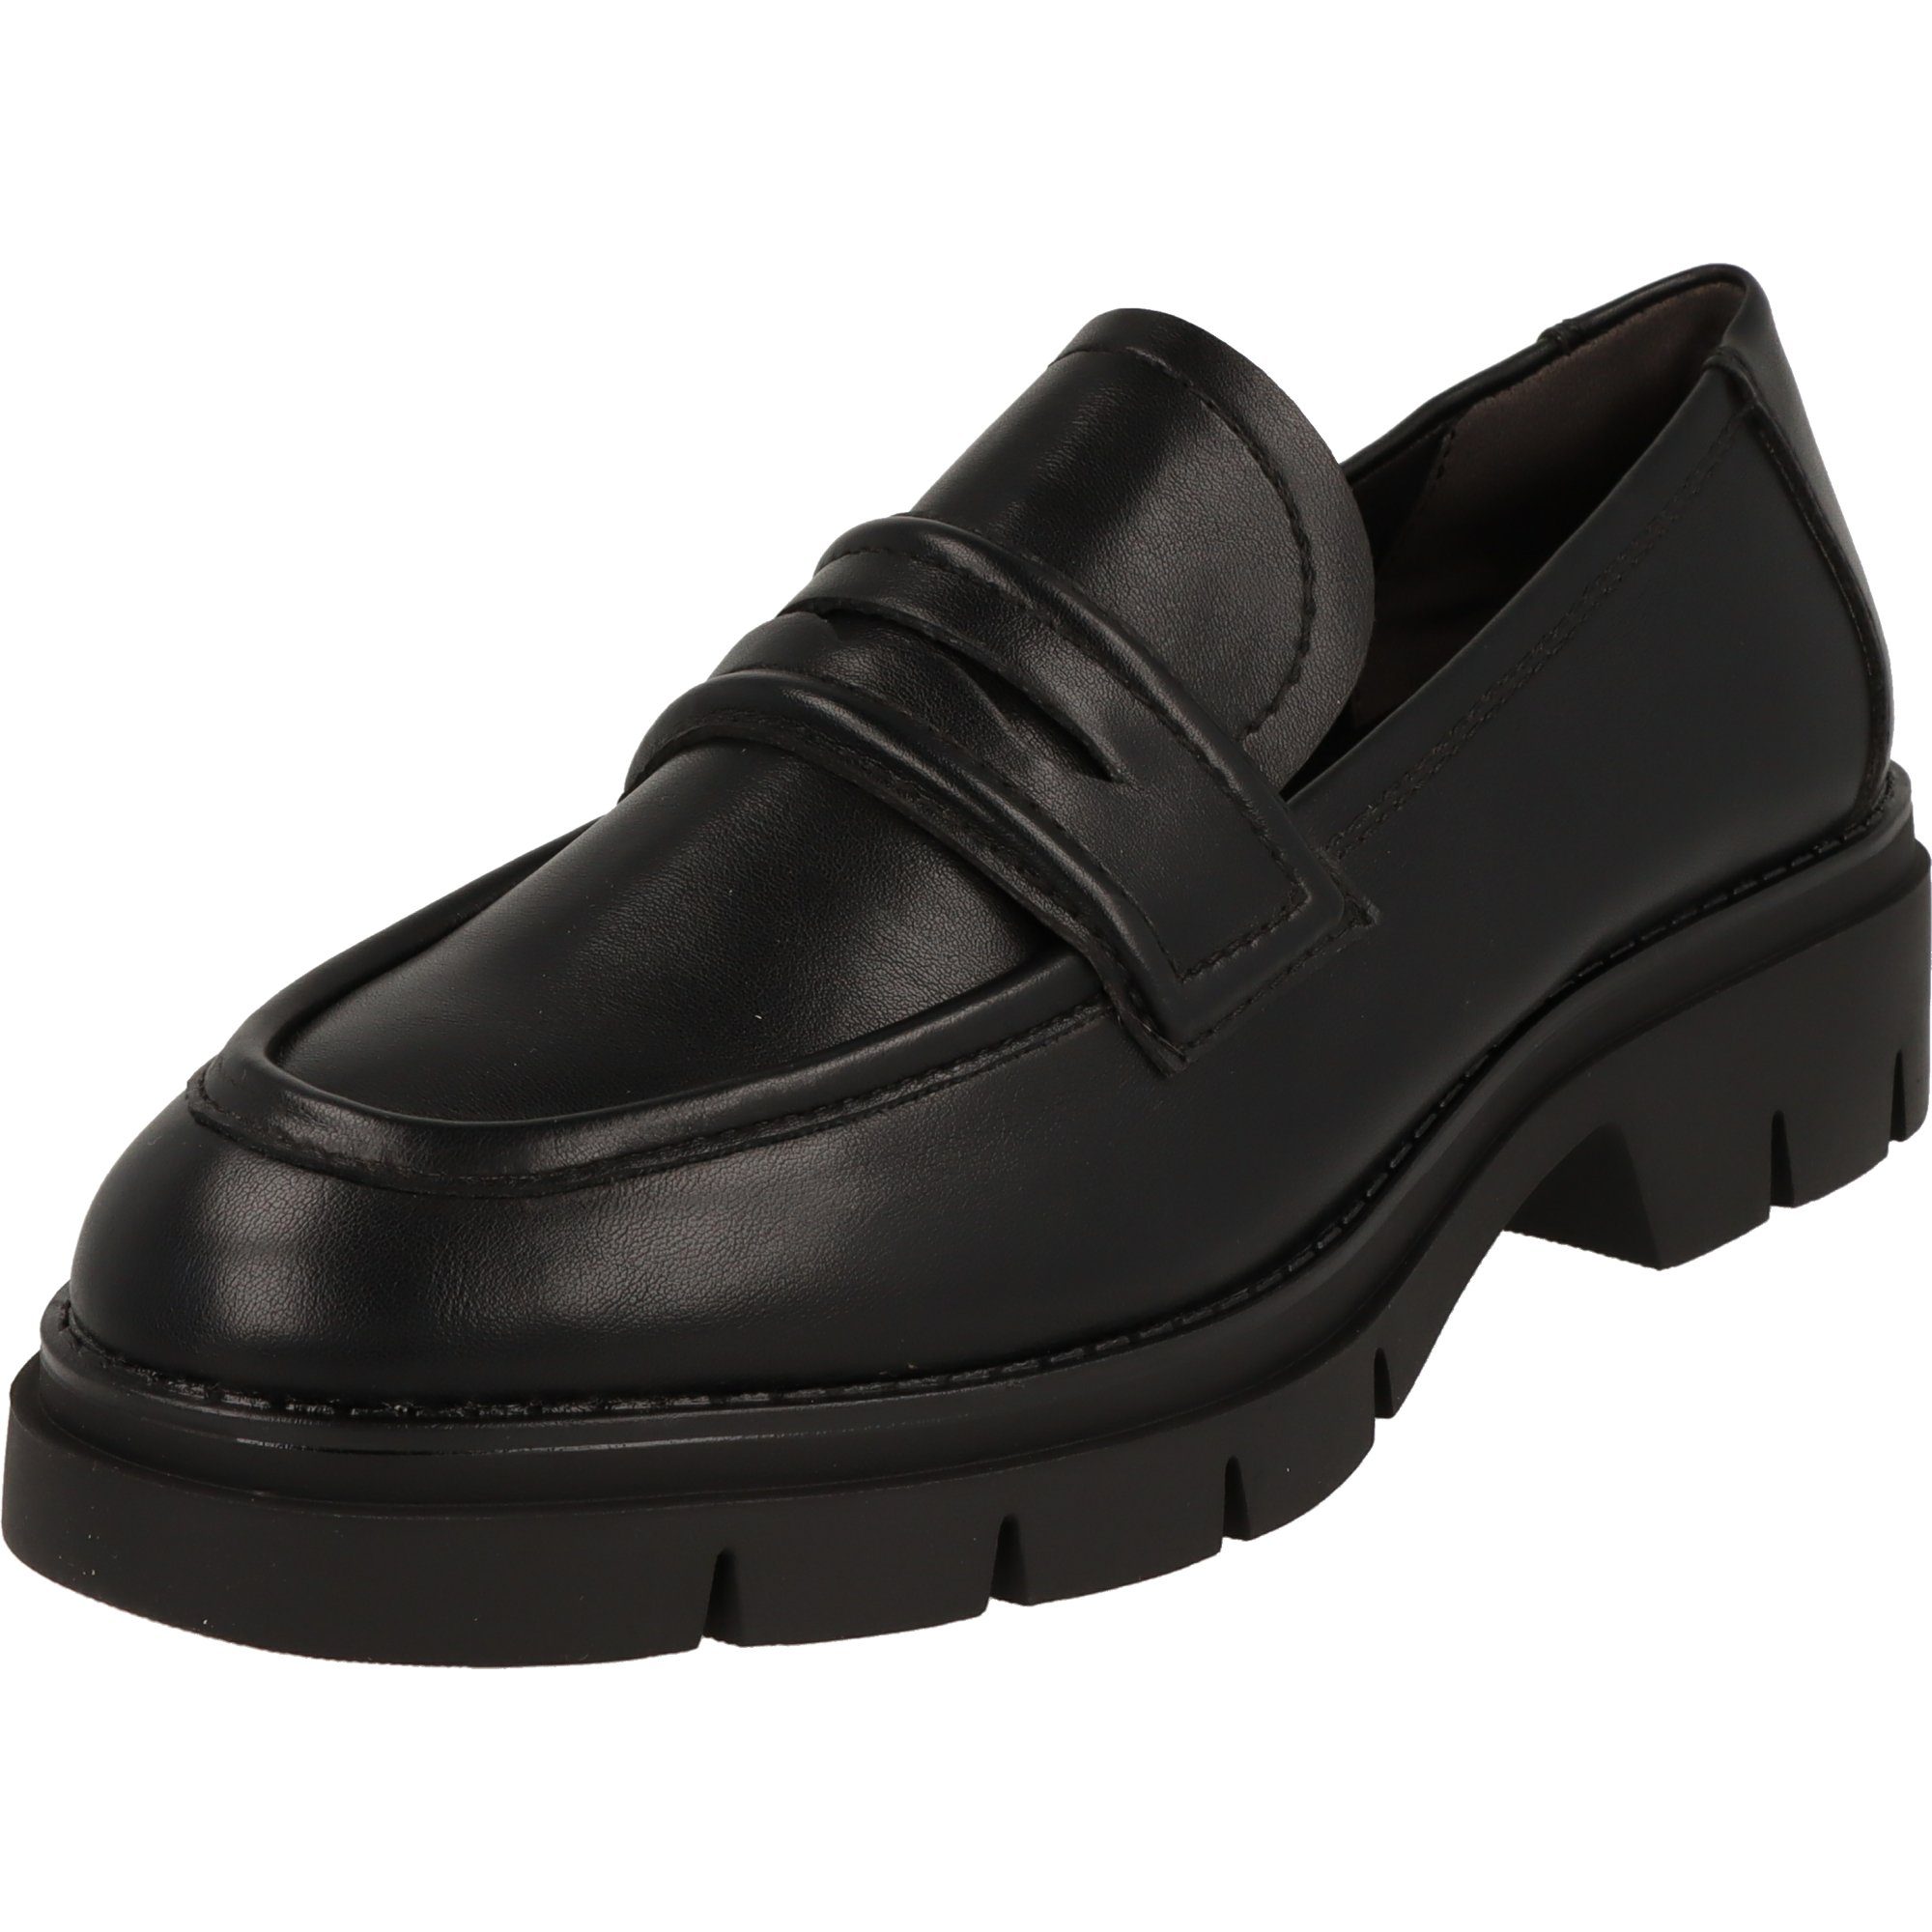 Tamaris Damen Schuhe Komfort Halbschuhe Matt Vegan 1-24313-41 Black Slipper Loafer